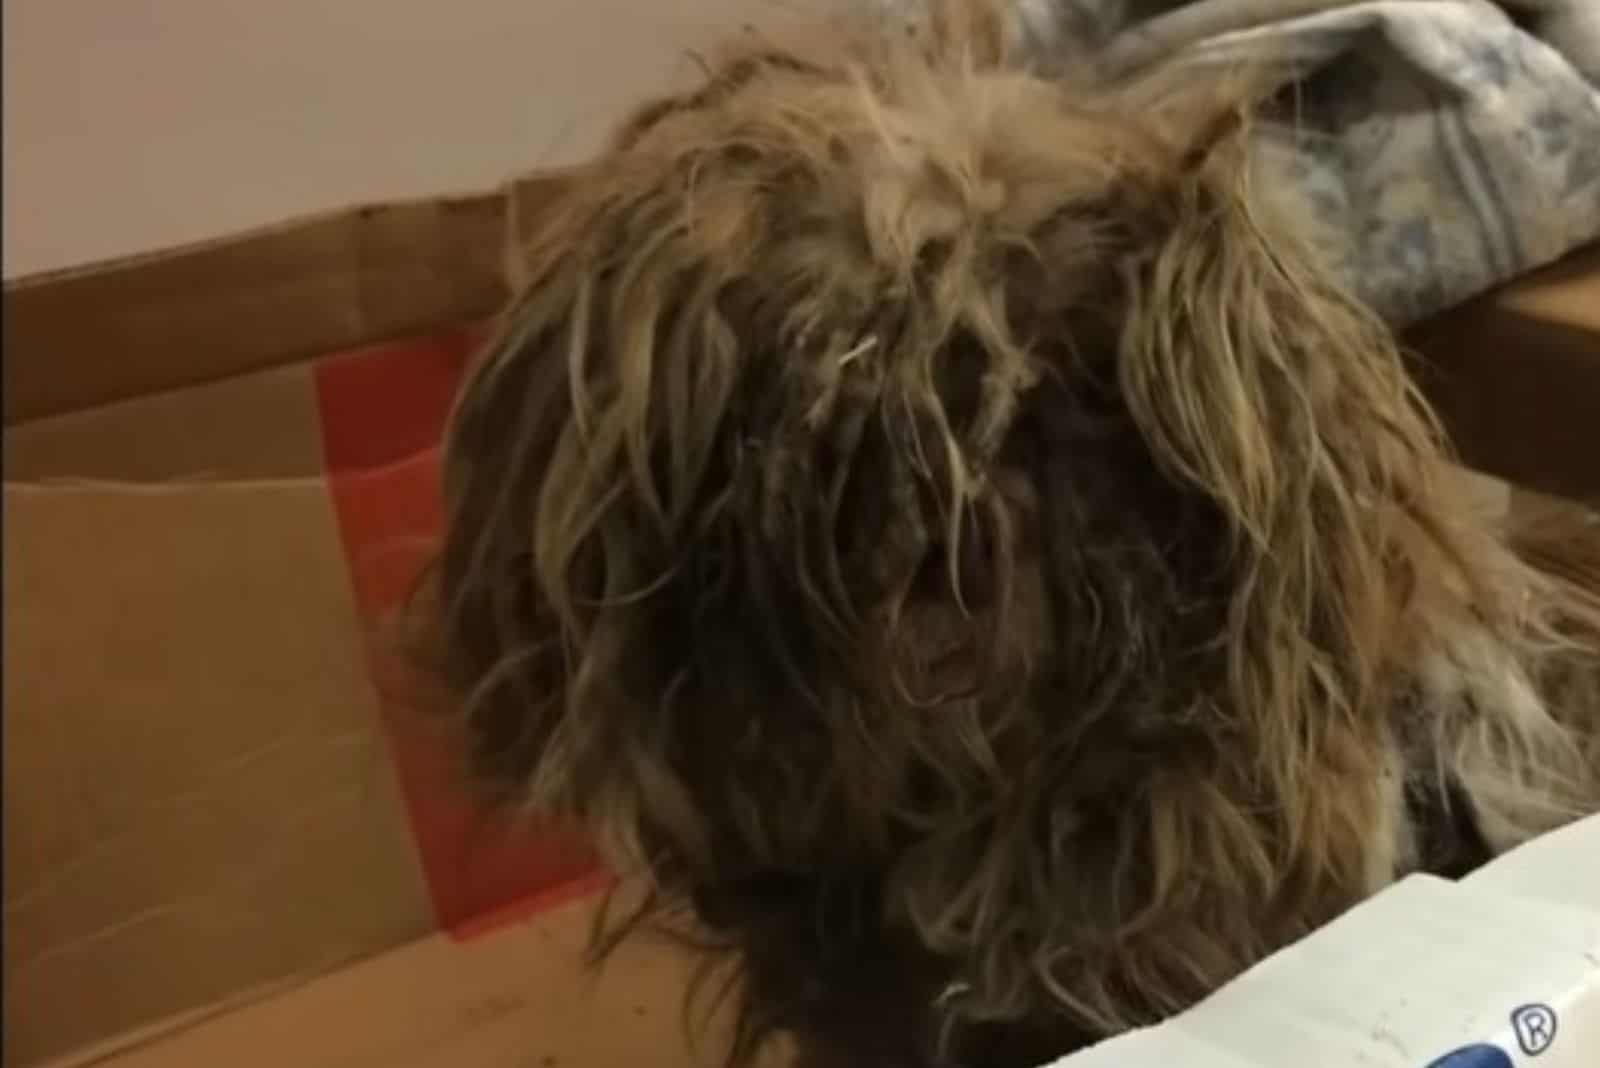 Dog with overgrown hair